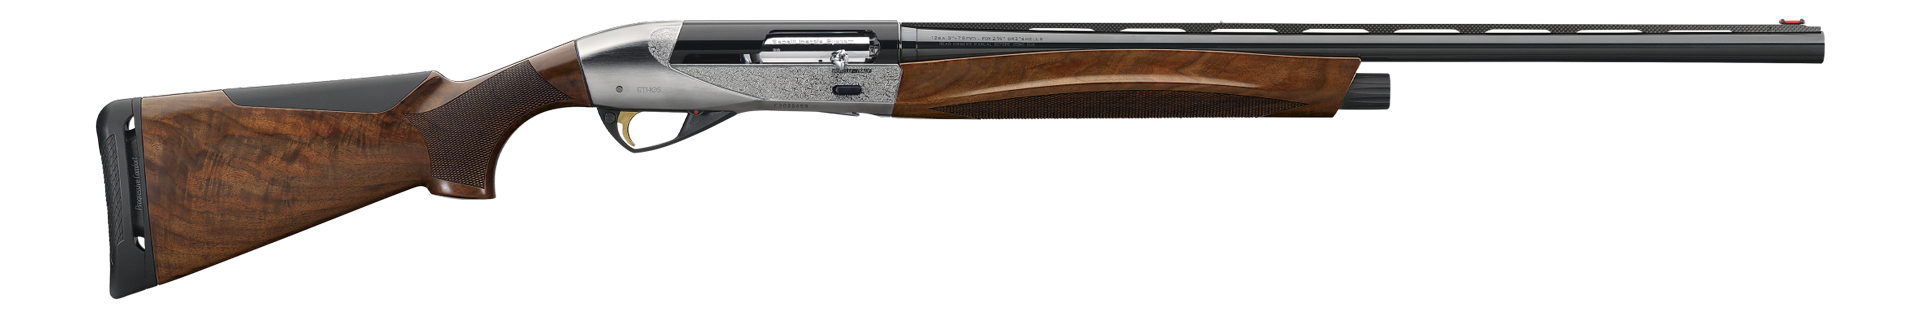 Benelli Ethos aa grade shotgun right-side view wood stock silver reciever black barrel